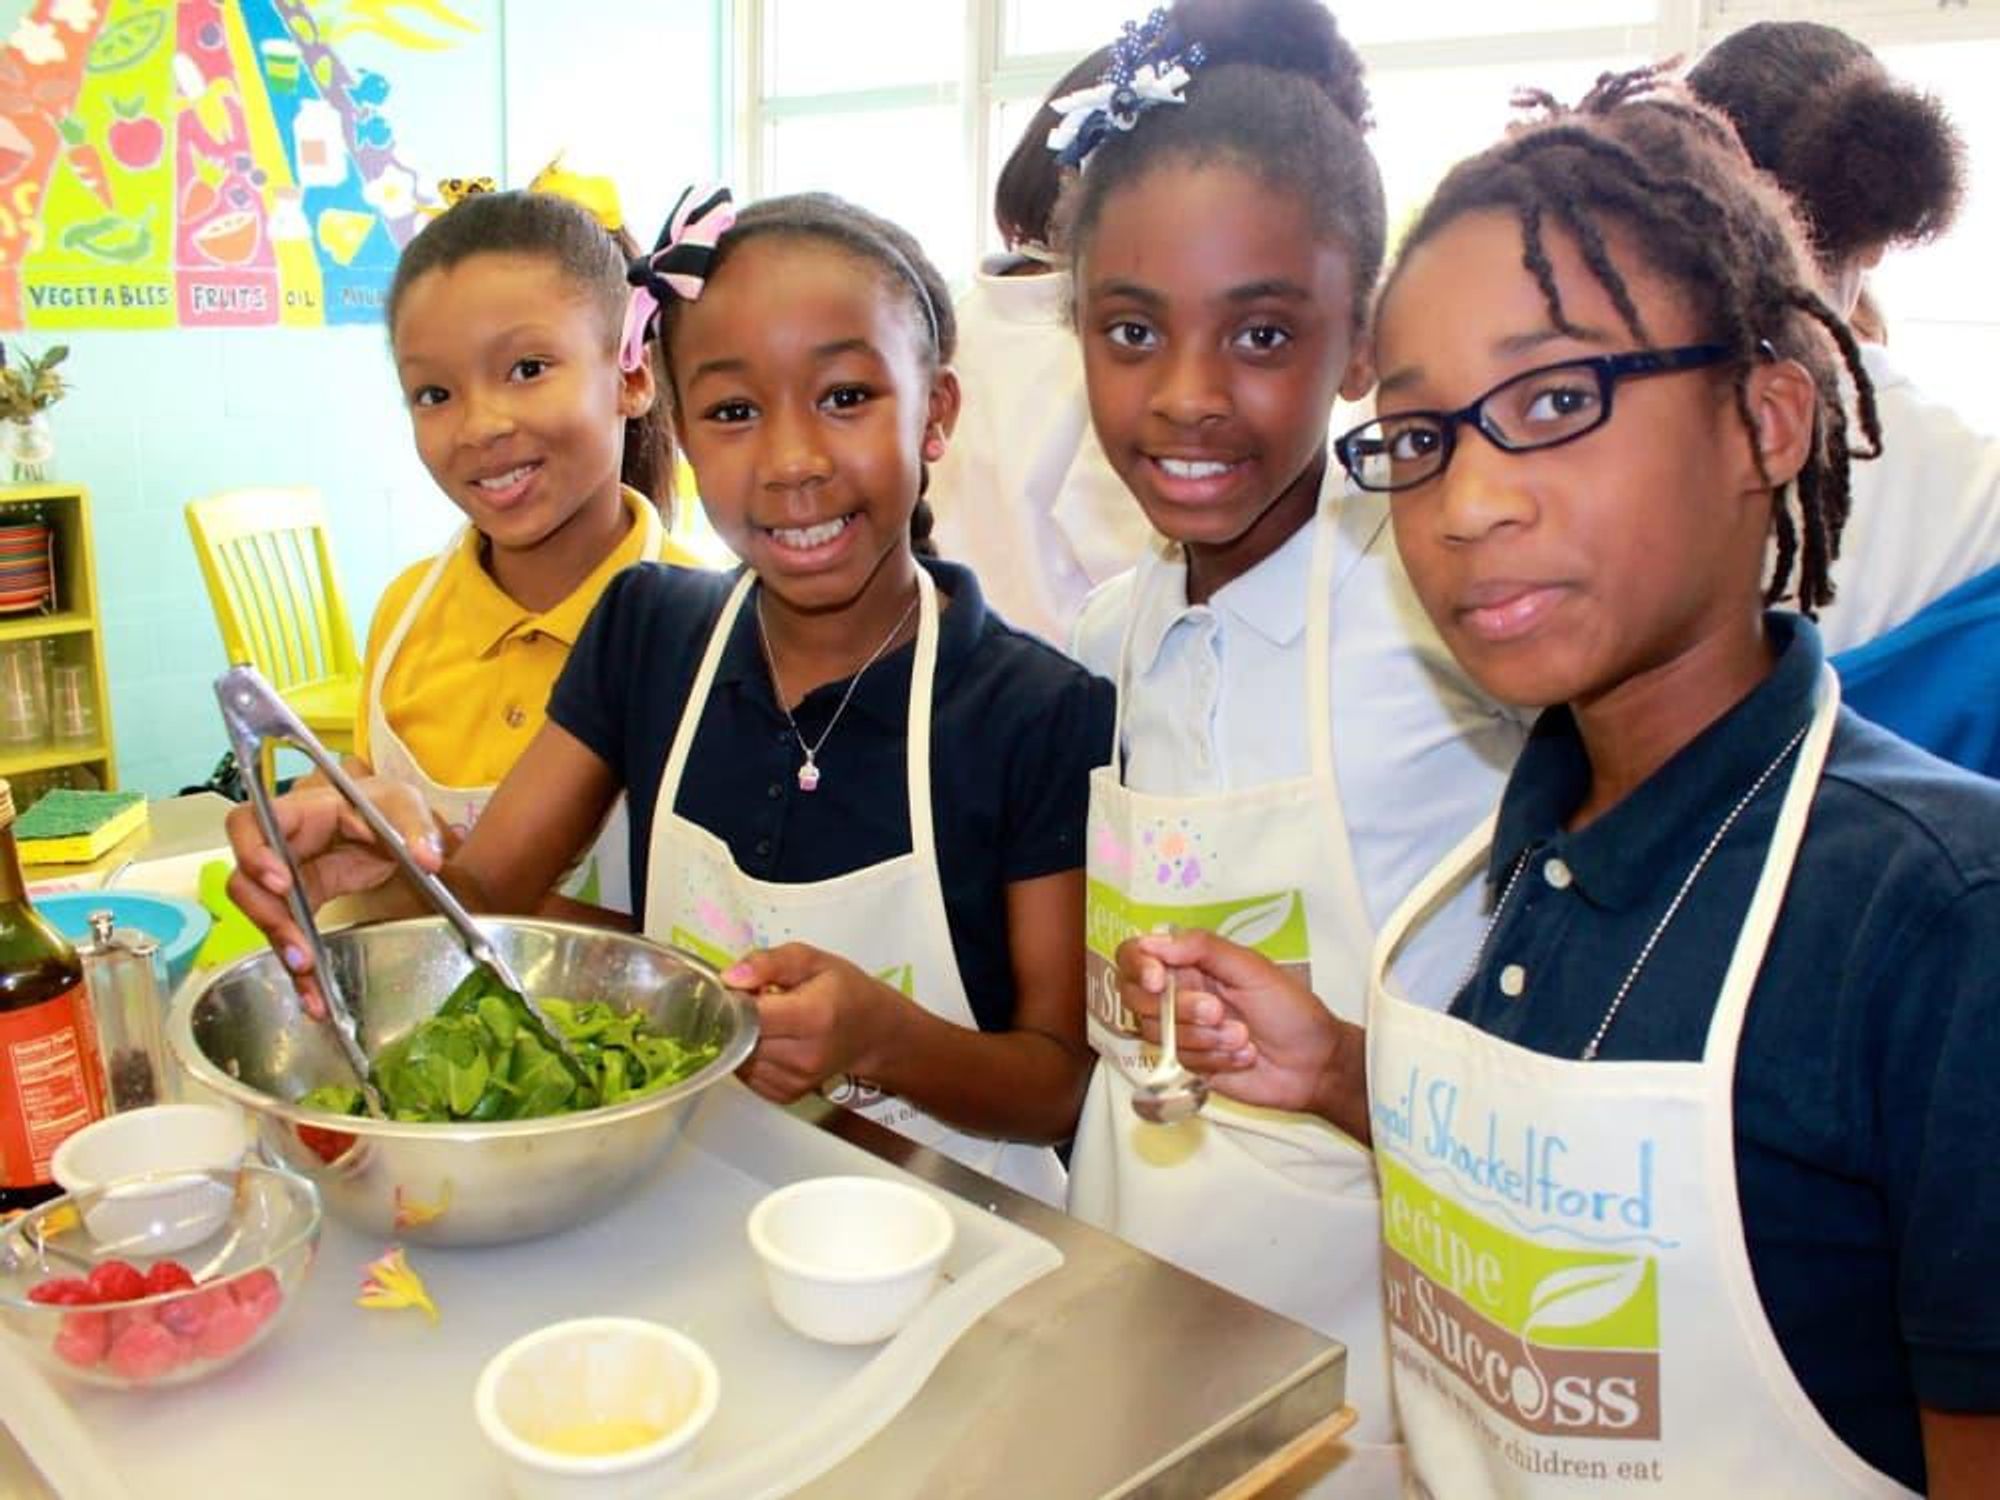 Recipe for Success children cooking from MacGregor Elementary School